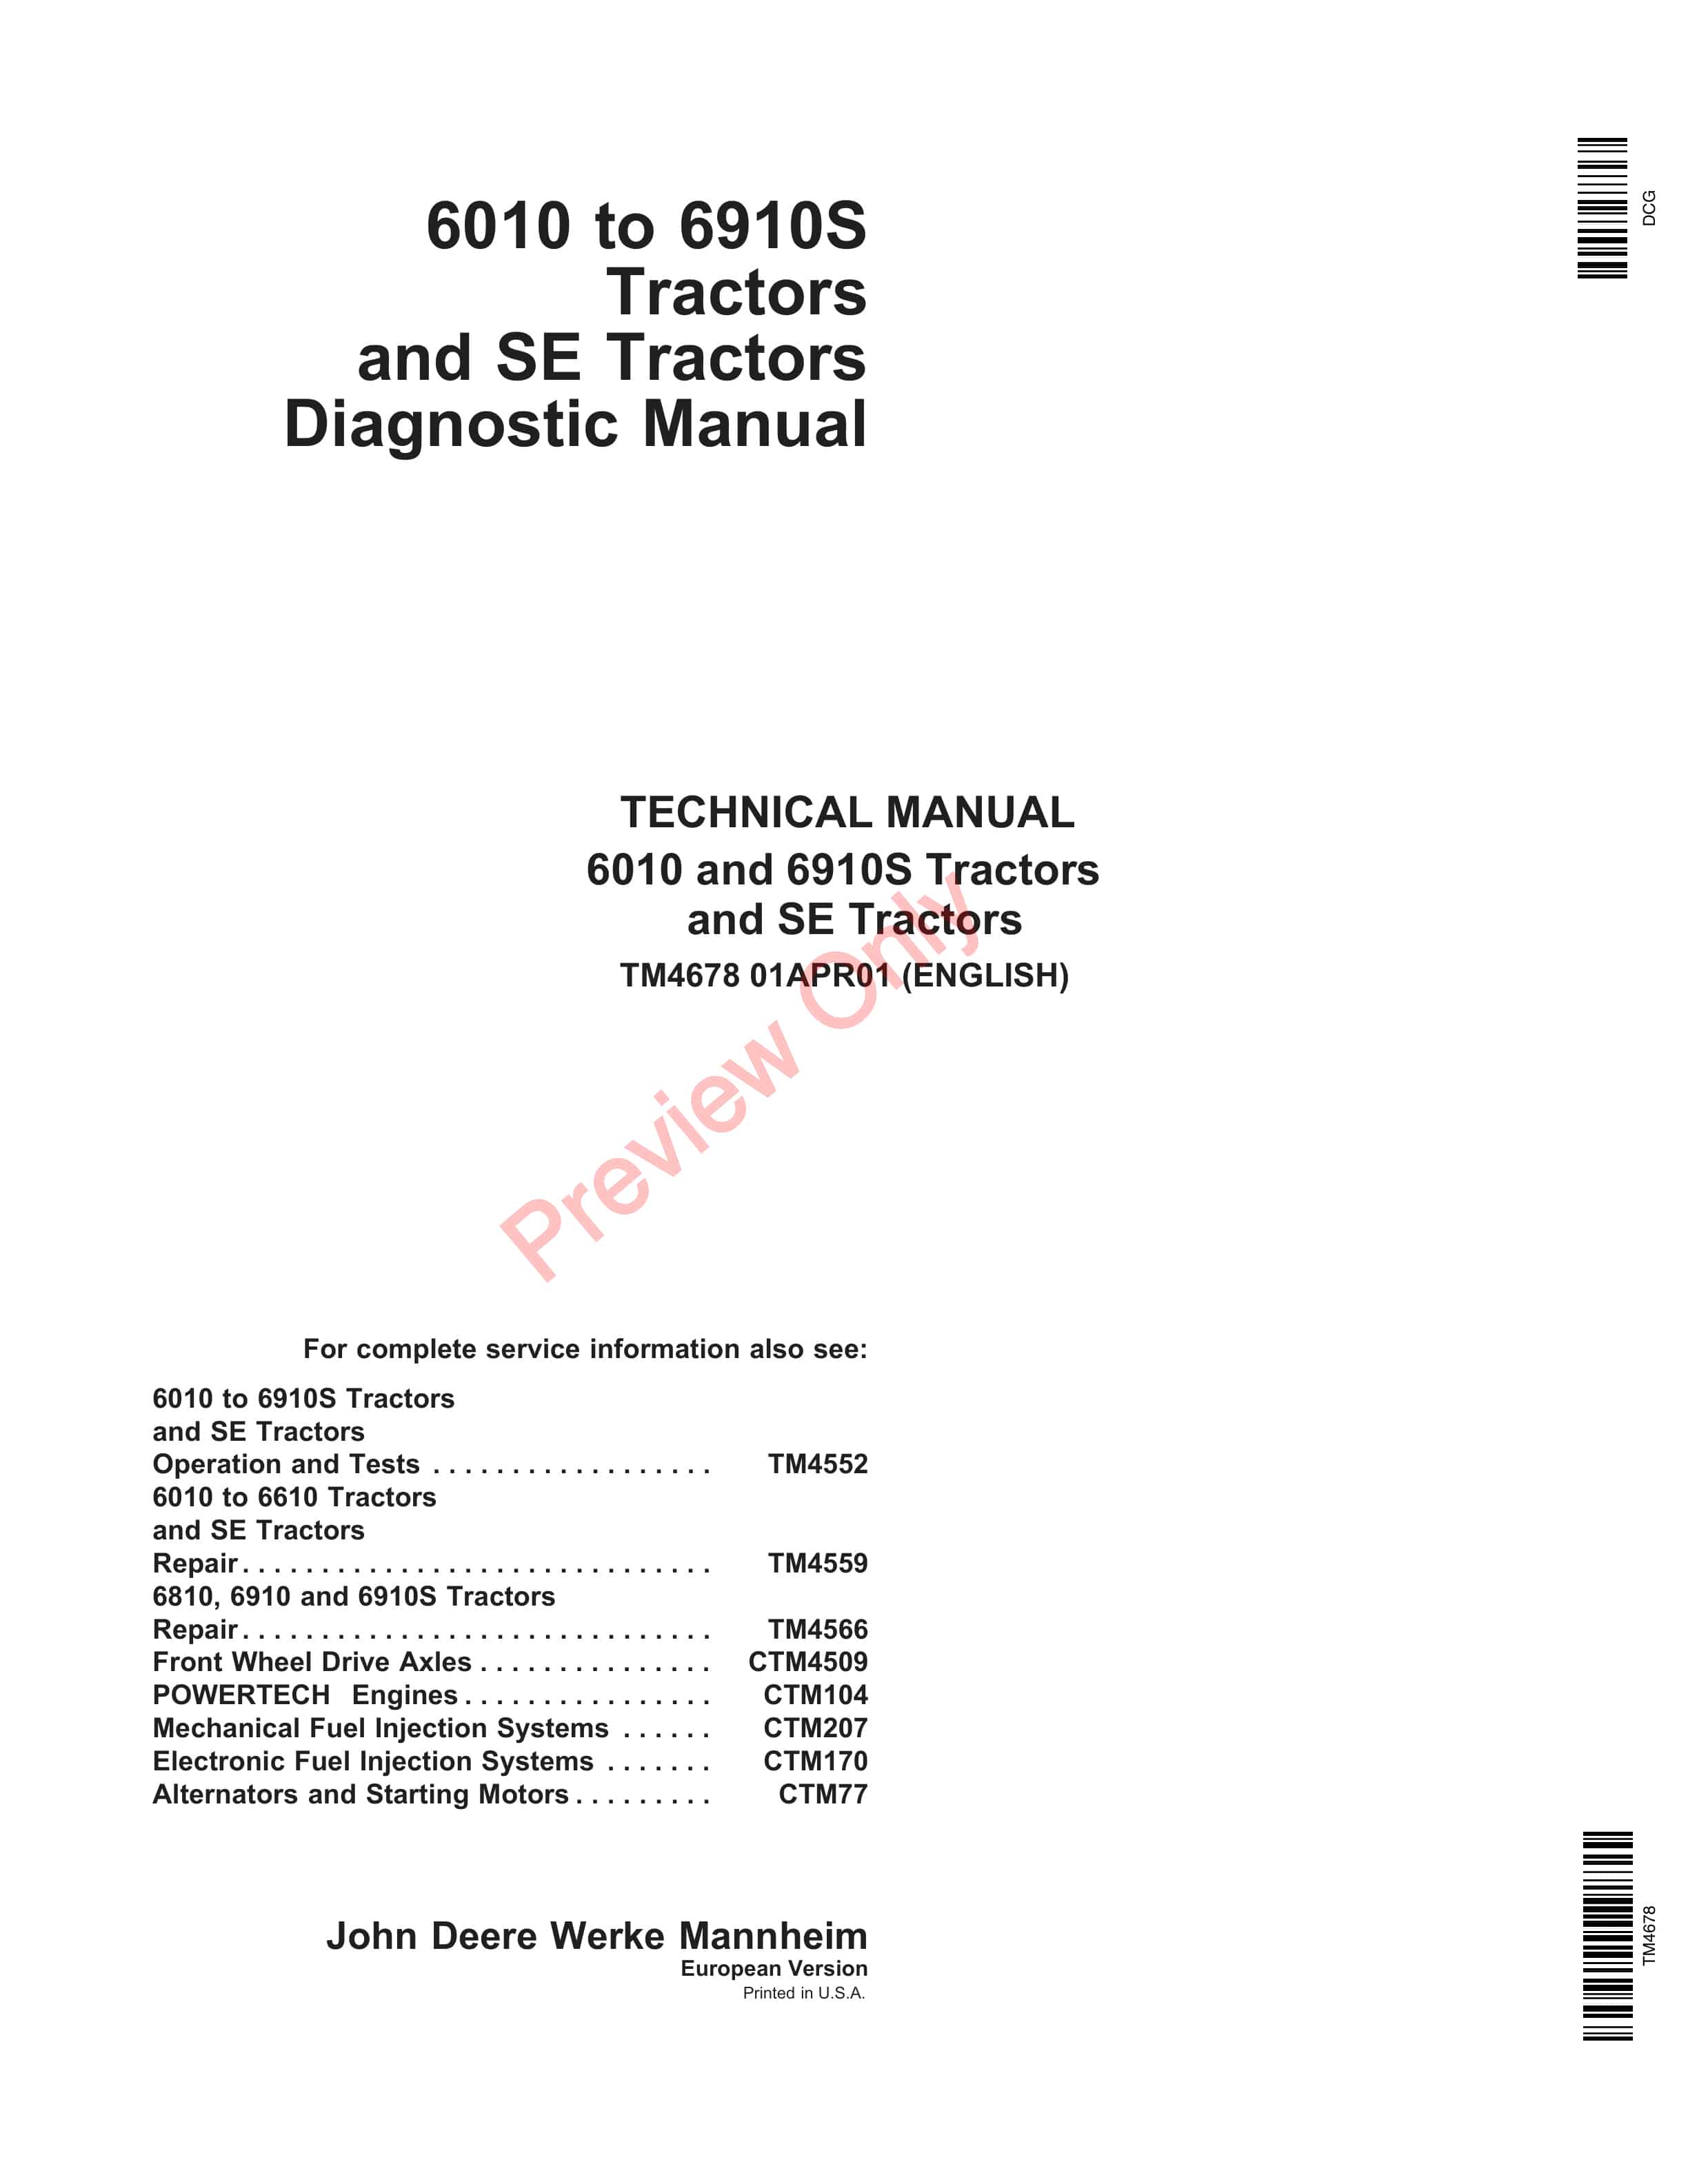 John Deere 6010 to 6910S Tractors and SE Tractors Service Information TM4678 01APR01 1